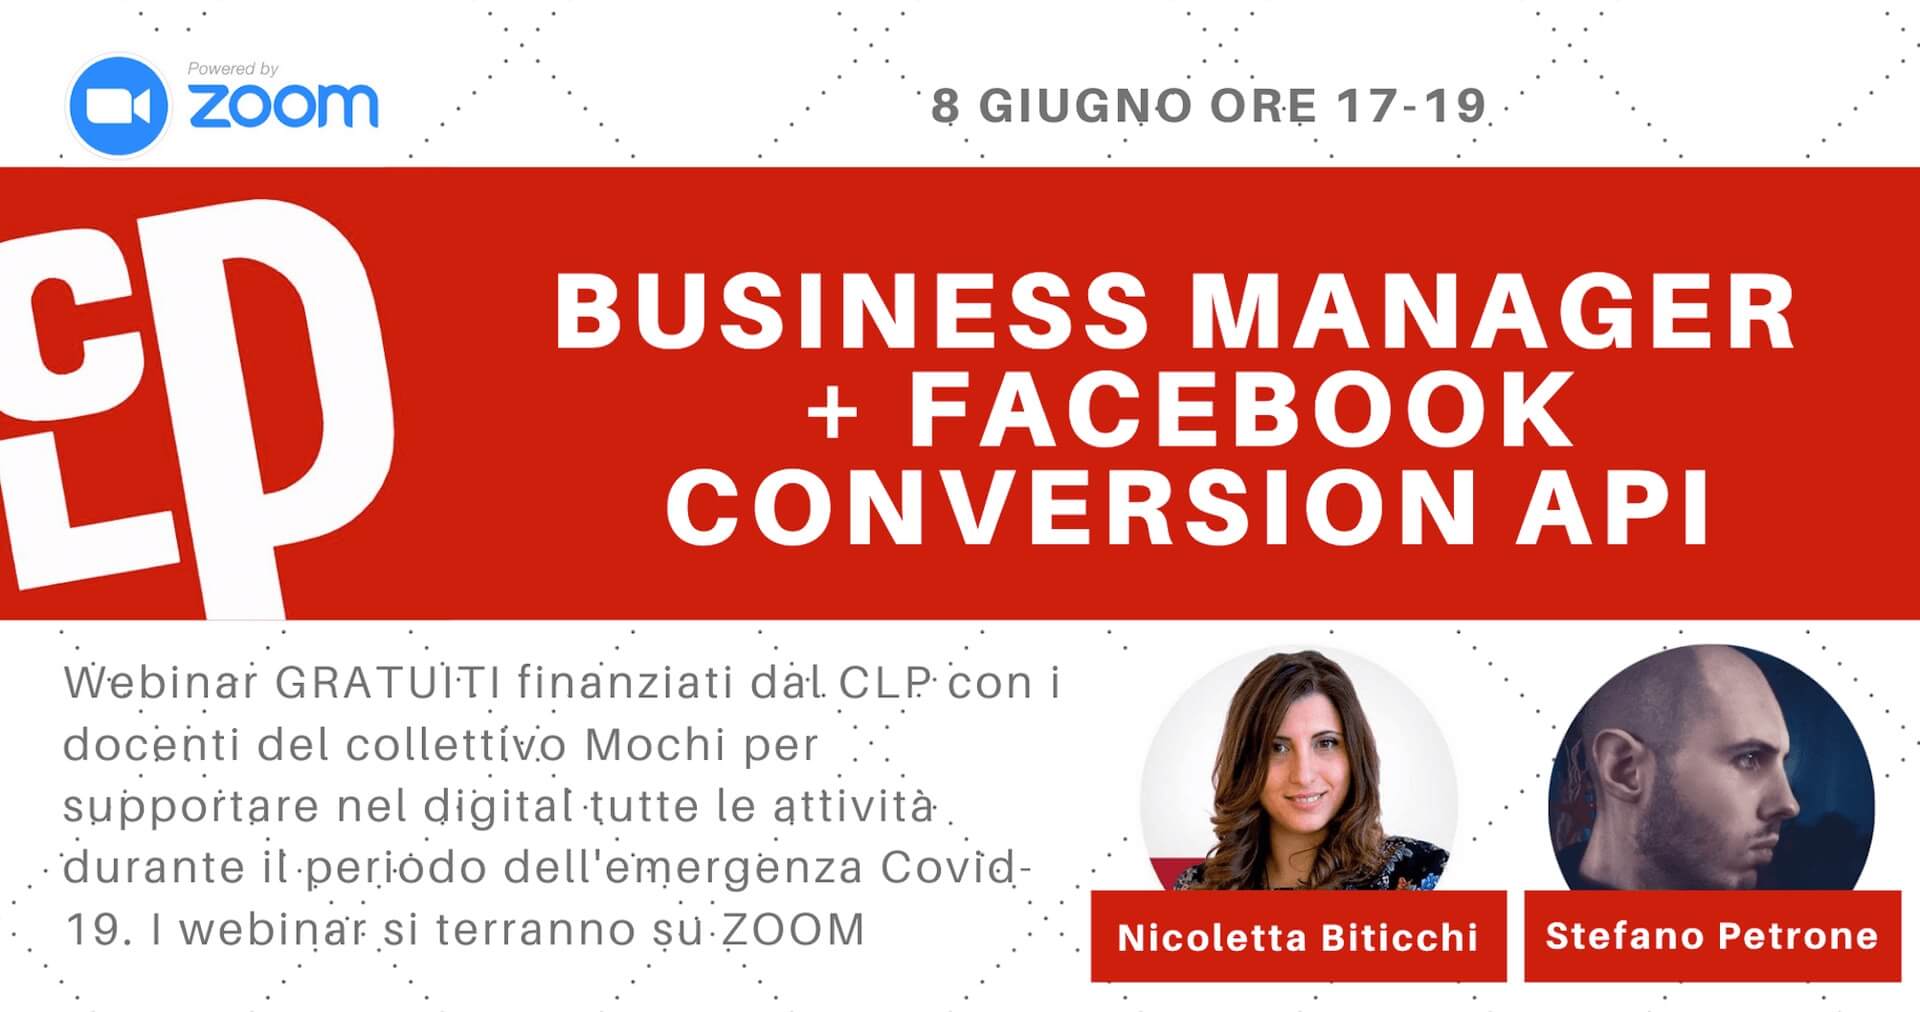 Business Manager + Facebook Conversion API